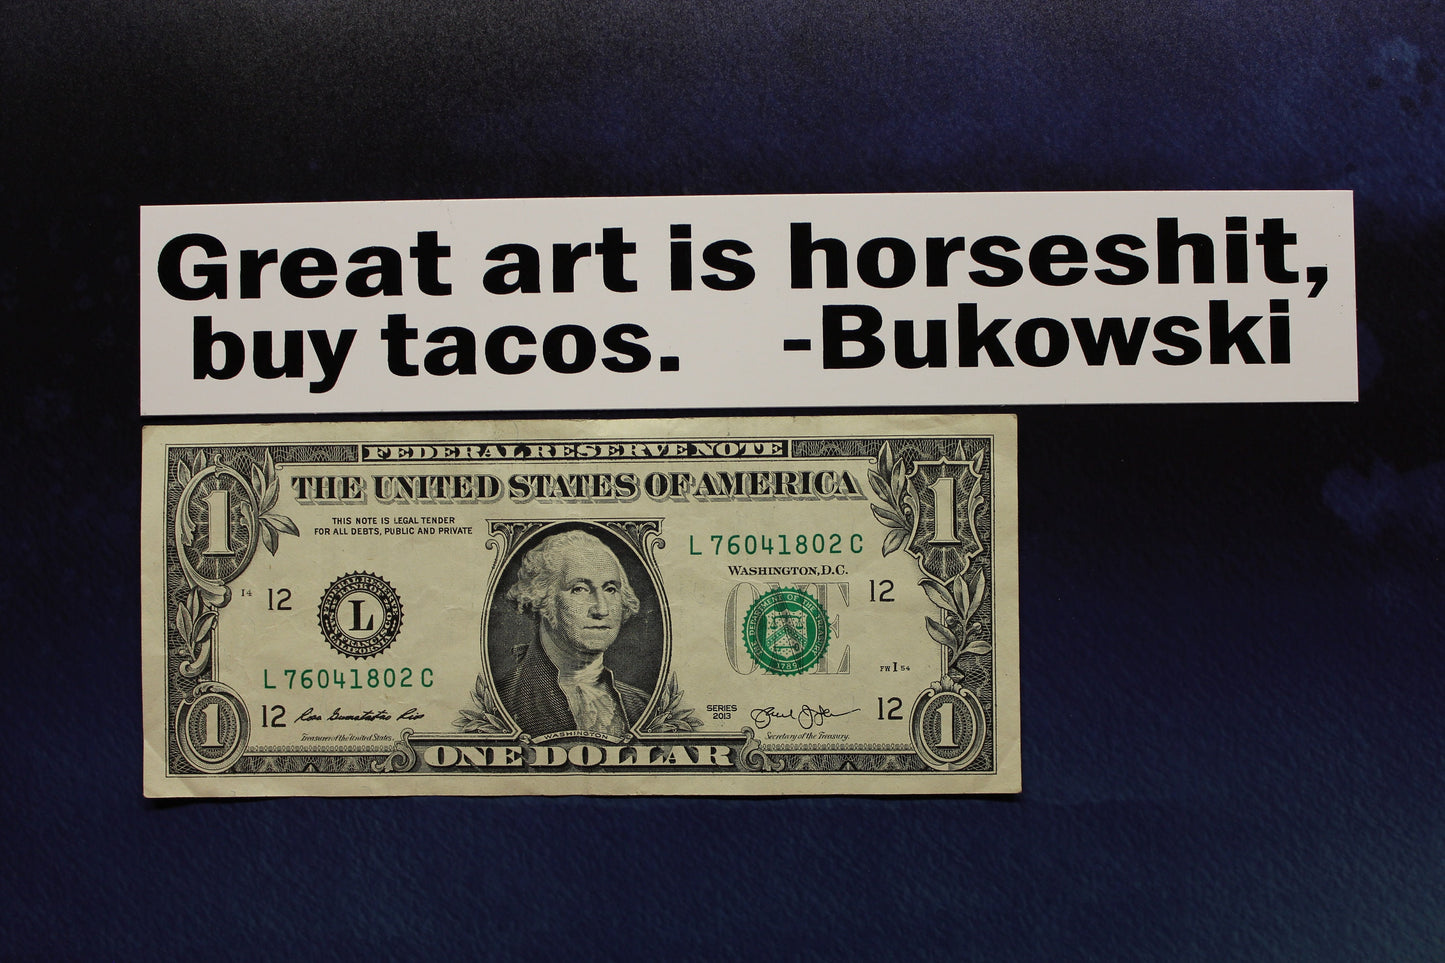 Charles Bukowski  Great art is horsesh#t, buy tacos vinyl sticker bumper car bike laptop guitar